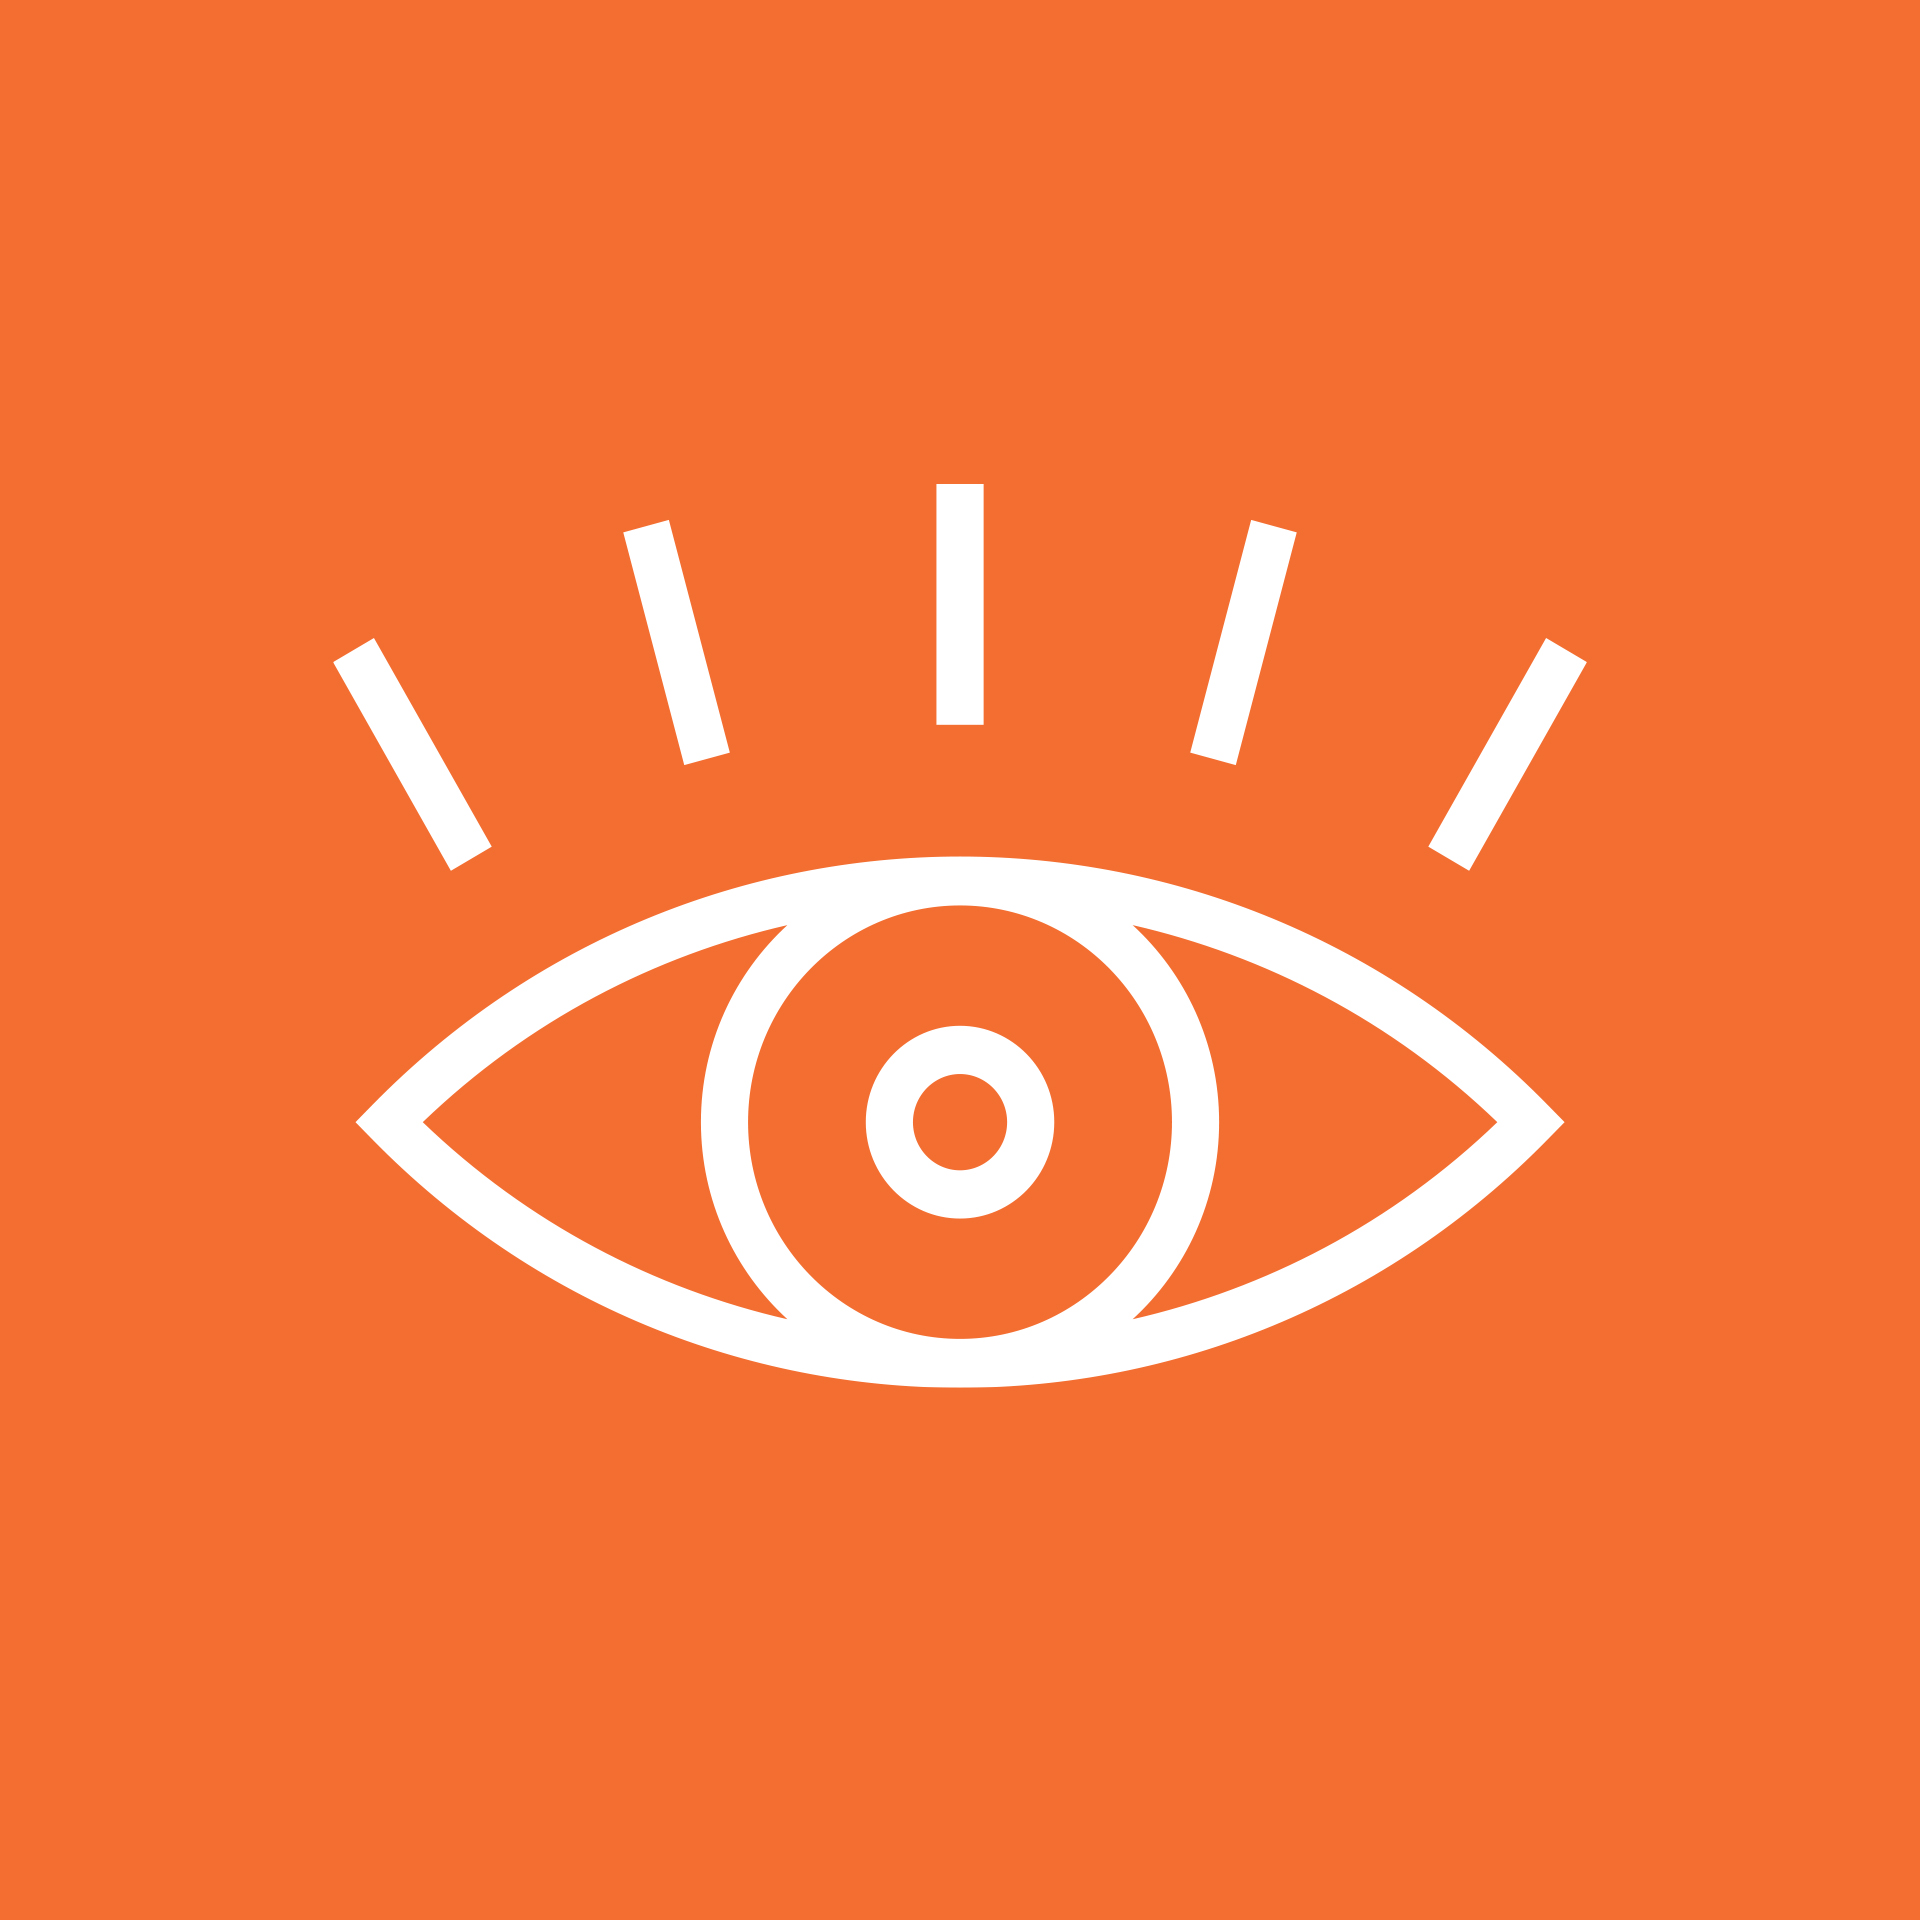 Mastercard Design Style Guide: eye icon